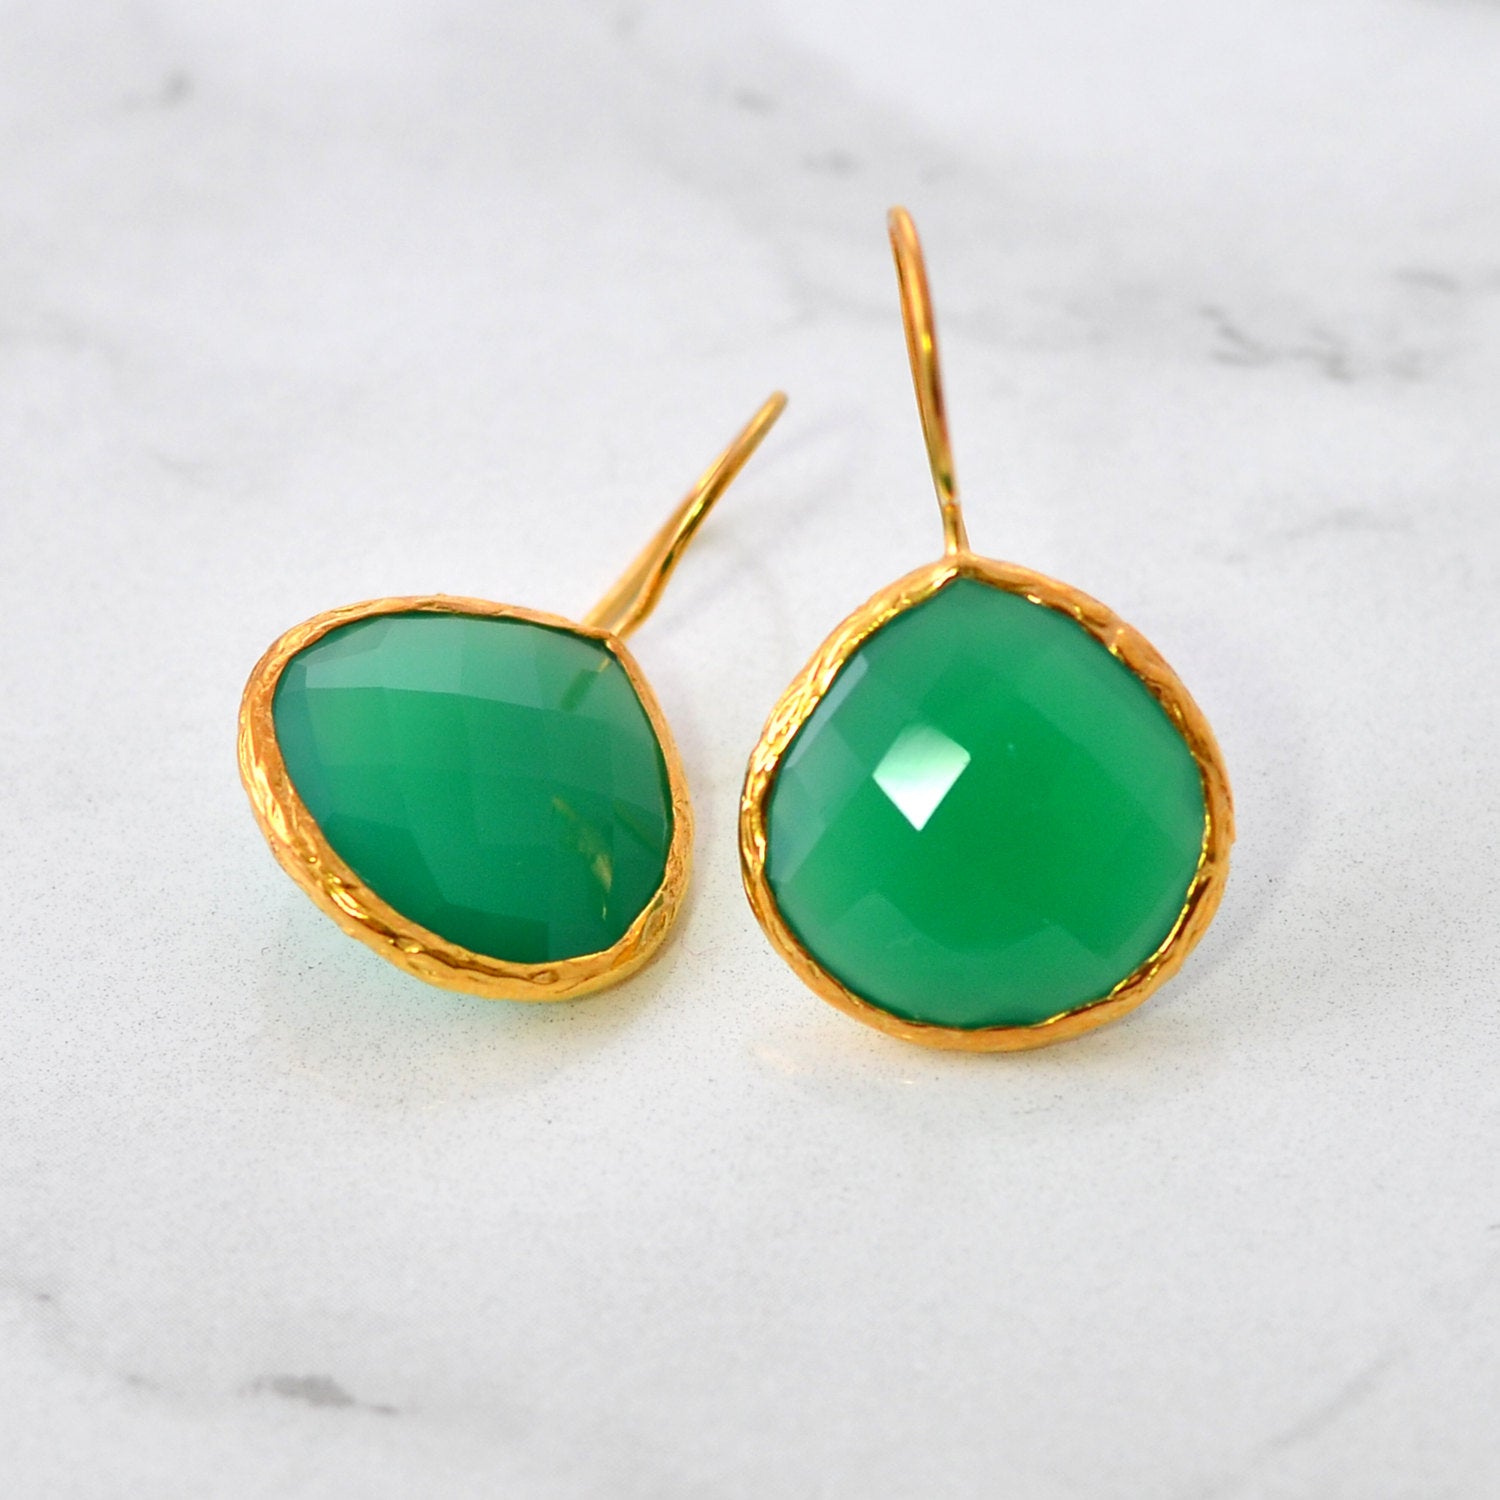 Emerald Green Earring - May Birthstone Earring - Green Onyx - Gold Hammered Framed Earring - Elegant Earring - Everyday Gemstone Earring